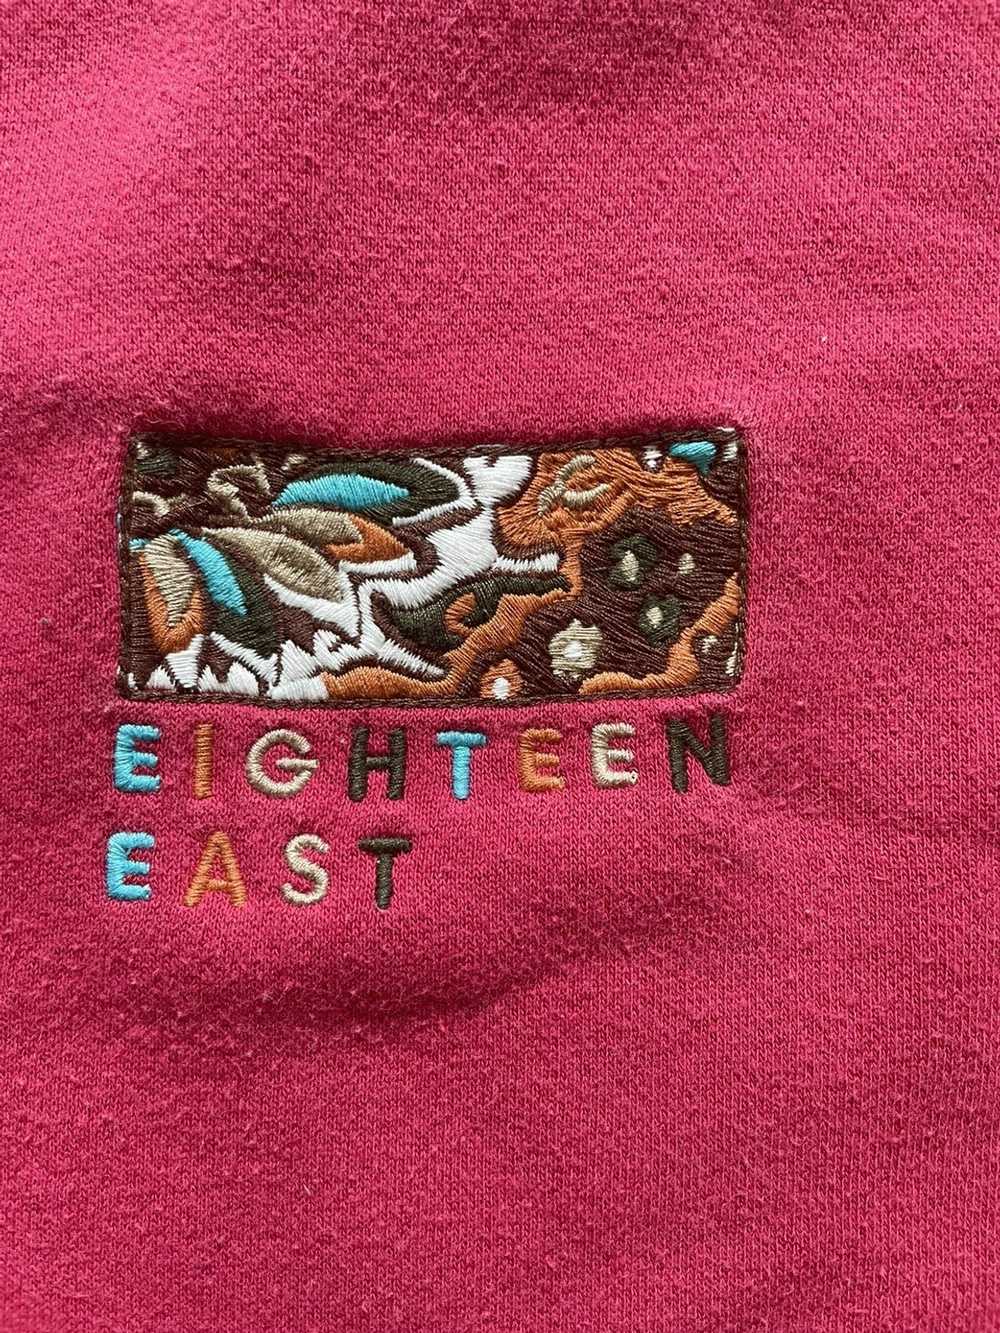 18 East Embroidered pink crewneck sweatshirt - image 2